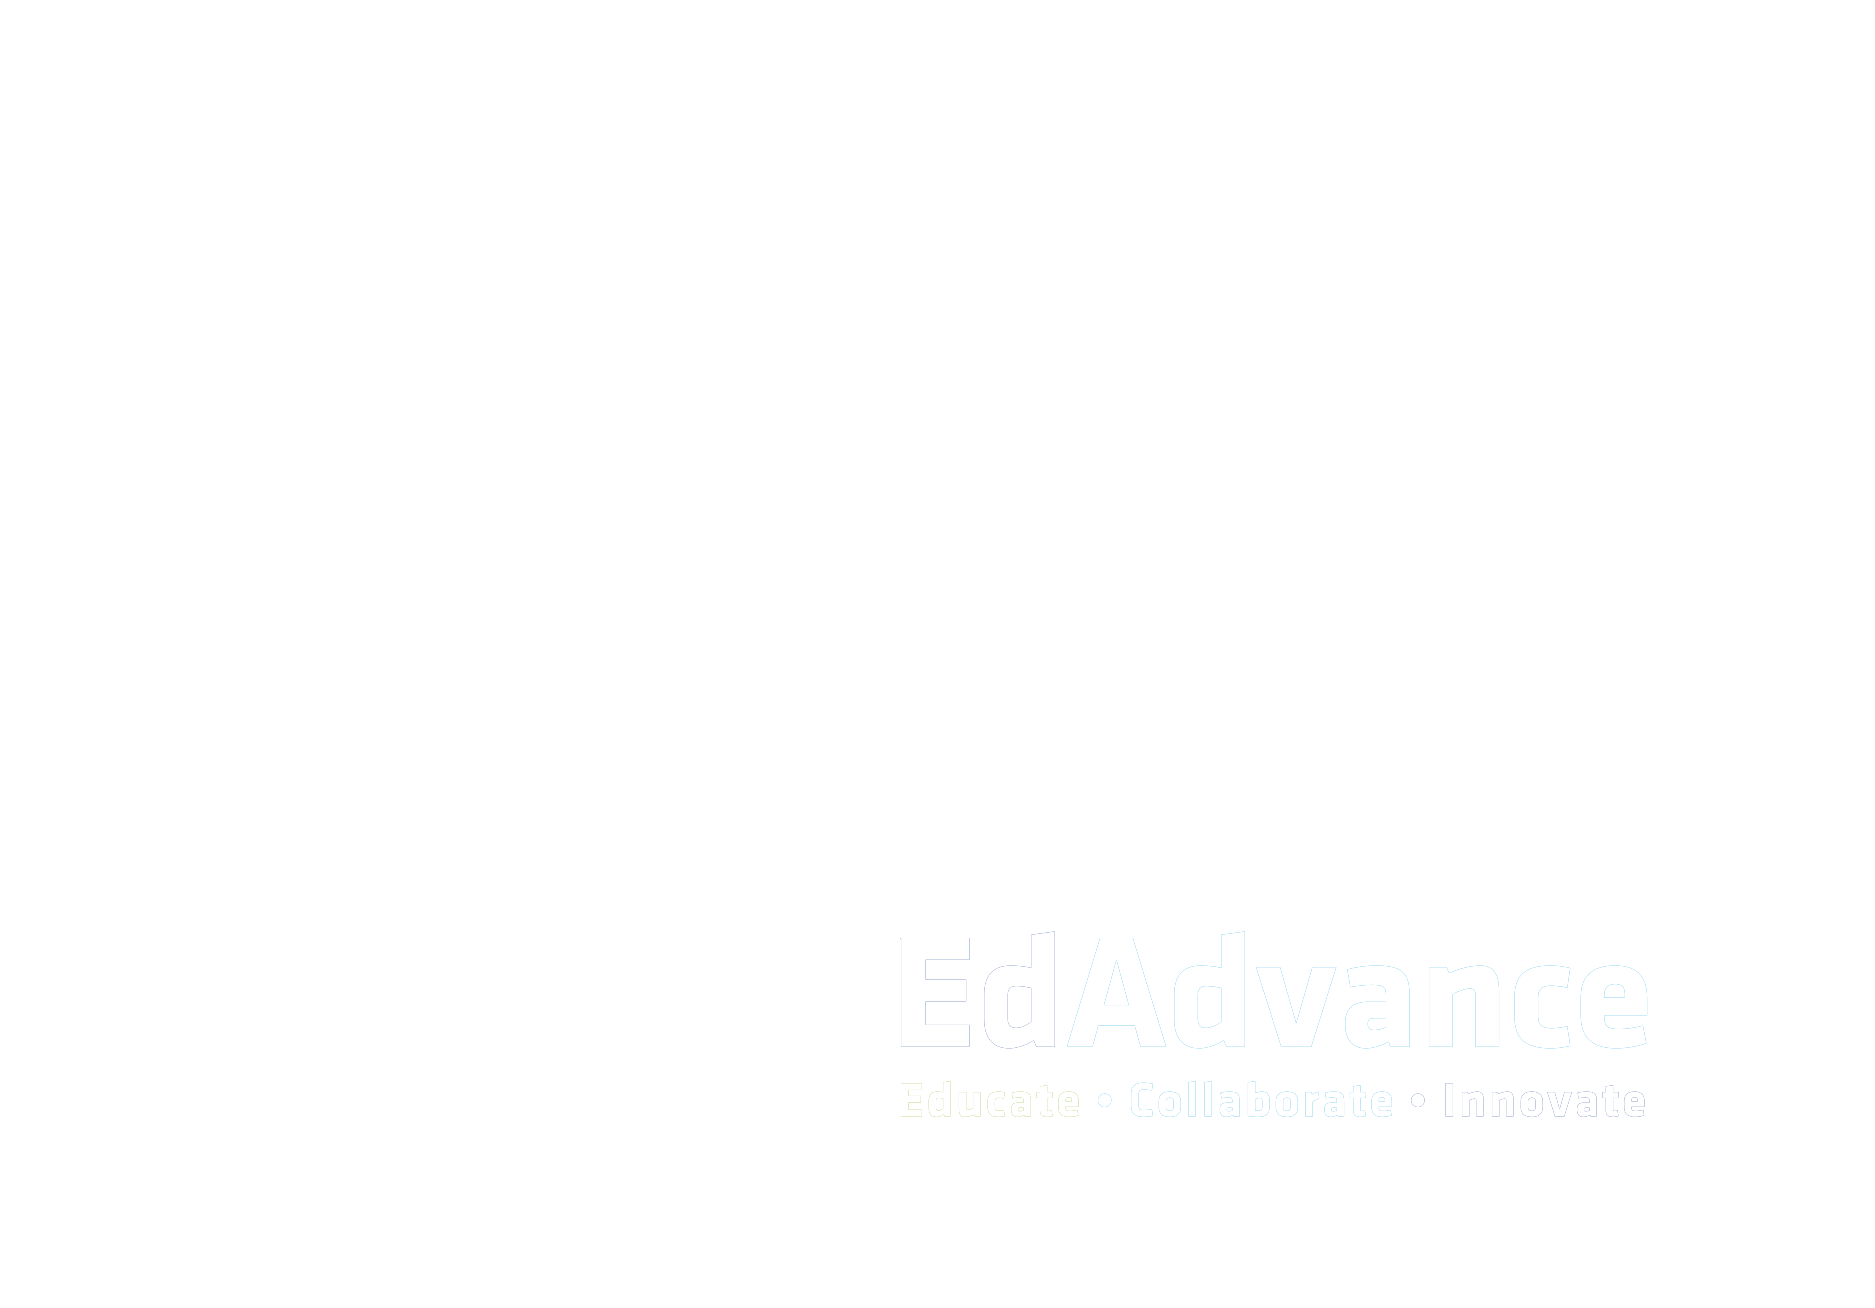 Skills21 logo  white 2021